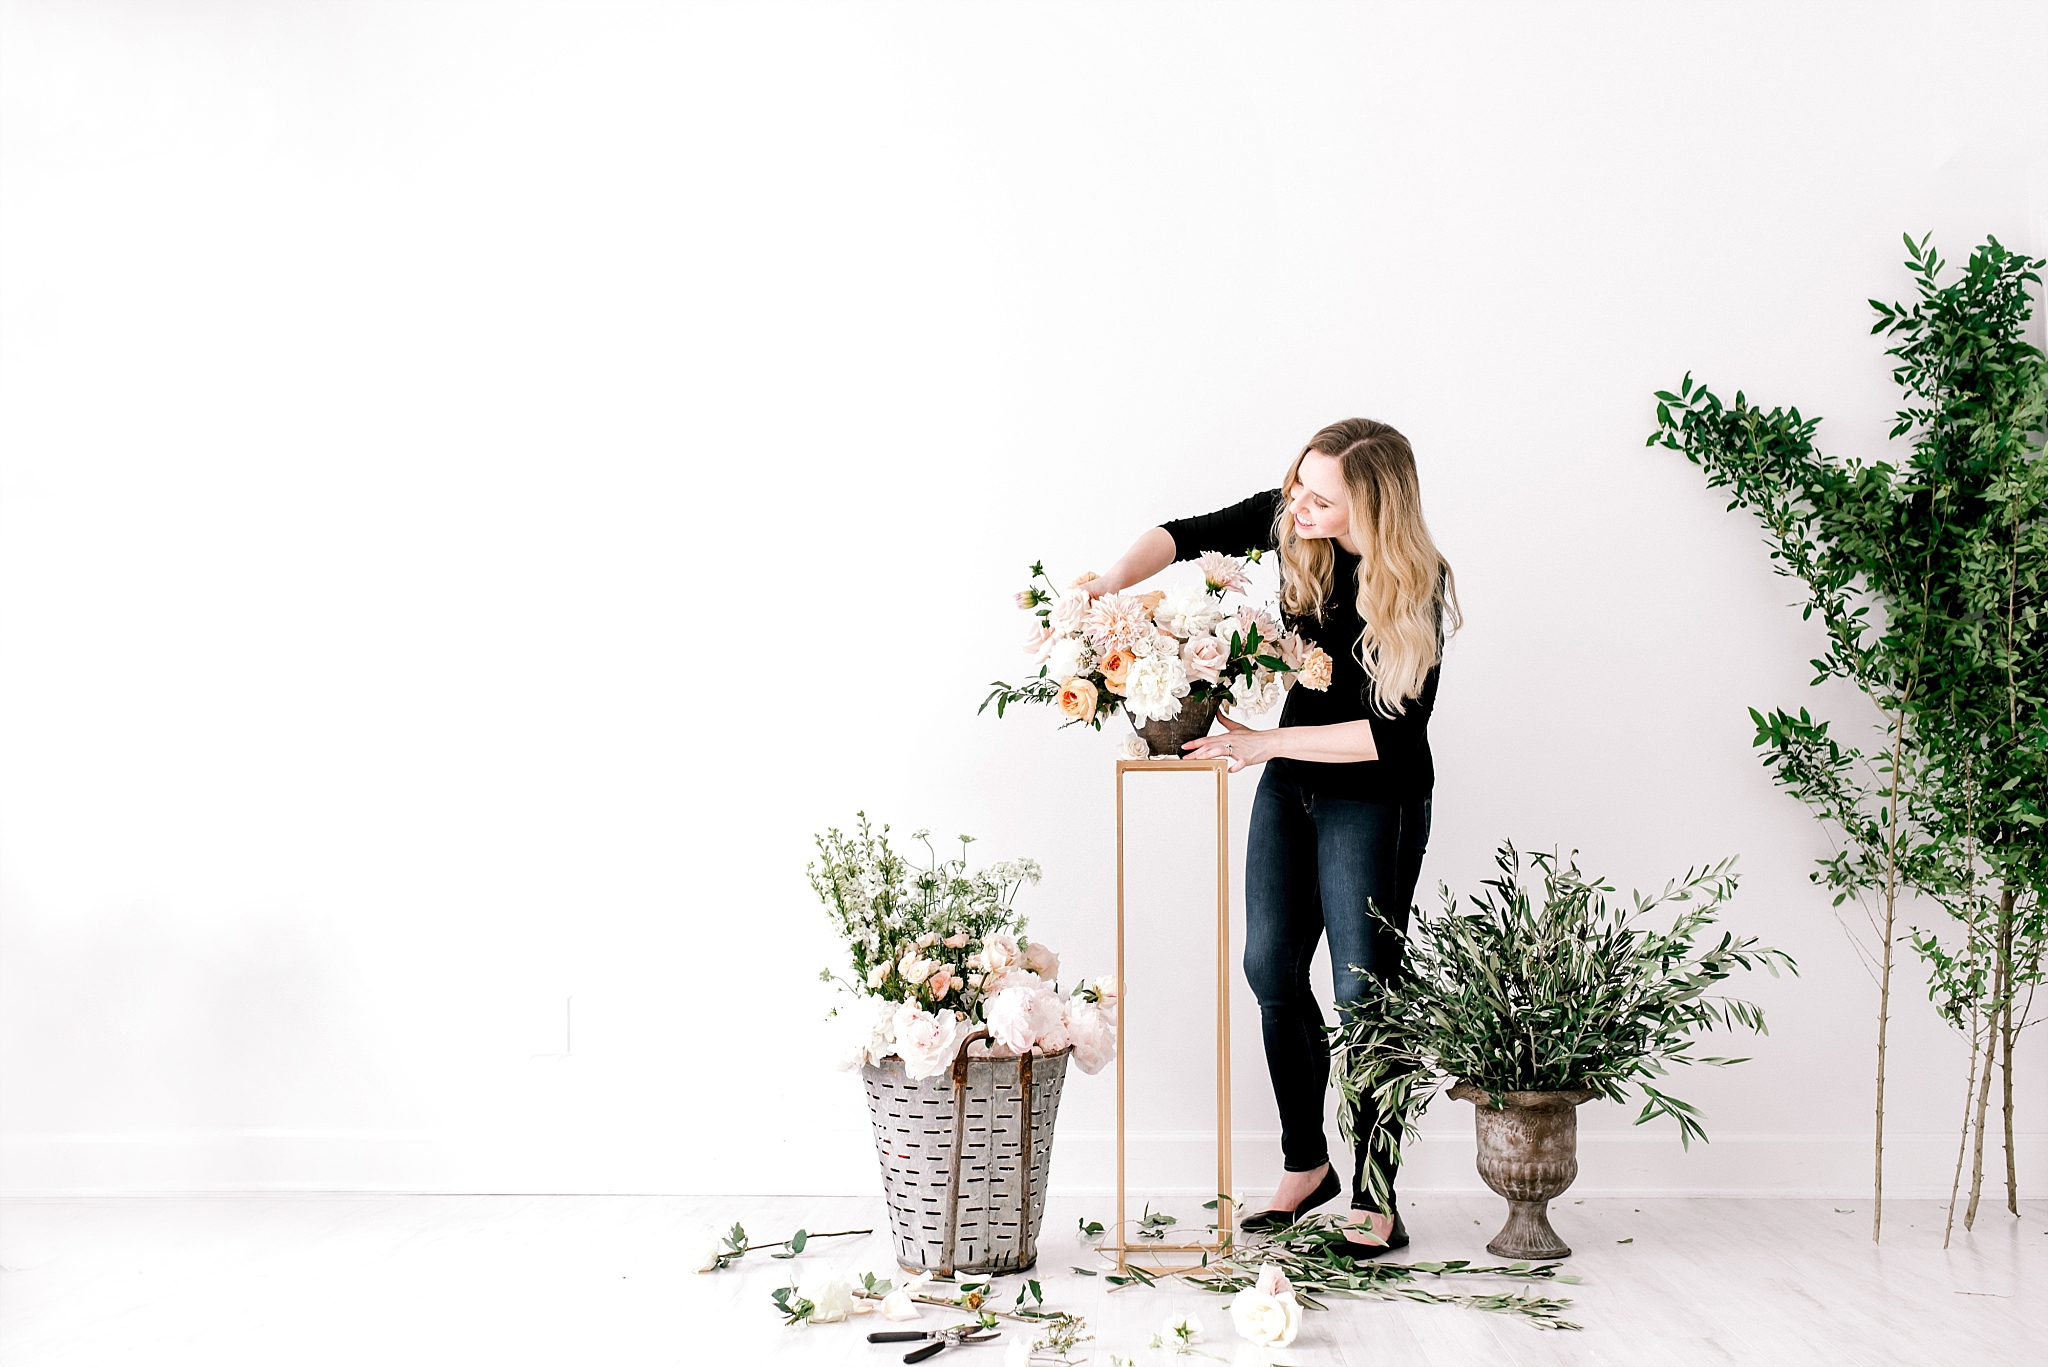 Wedding florist arranging flowers